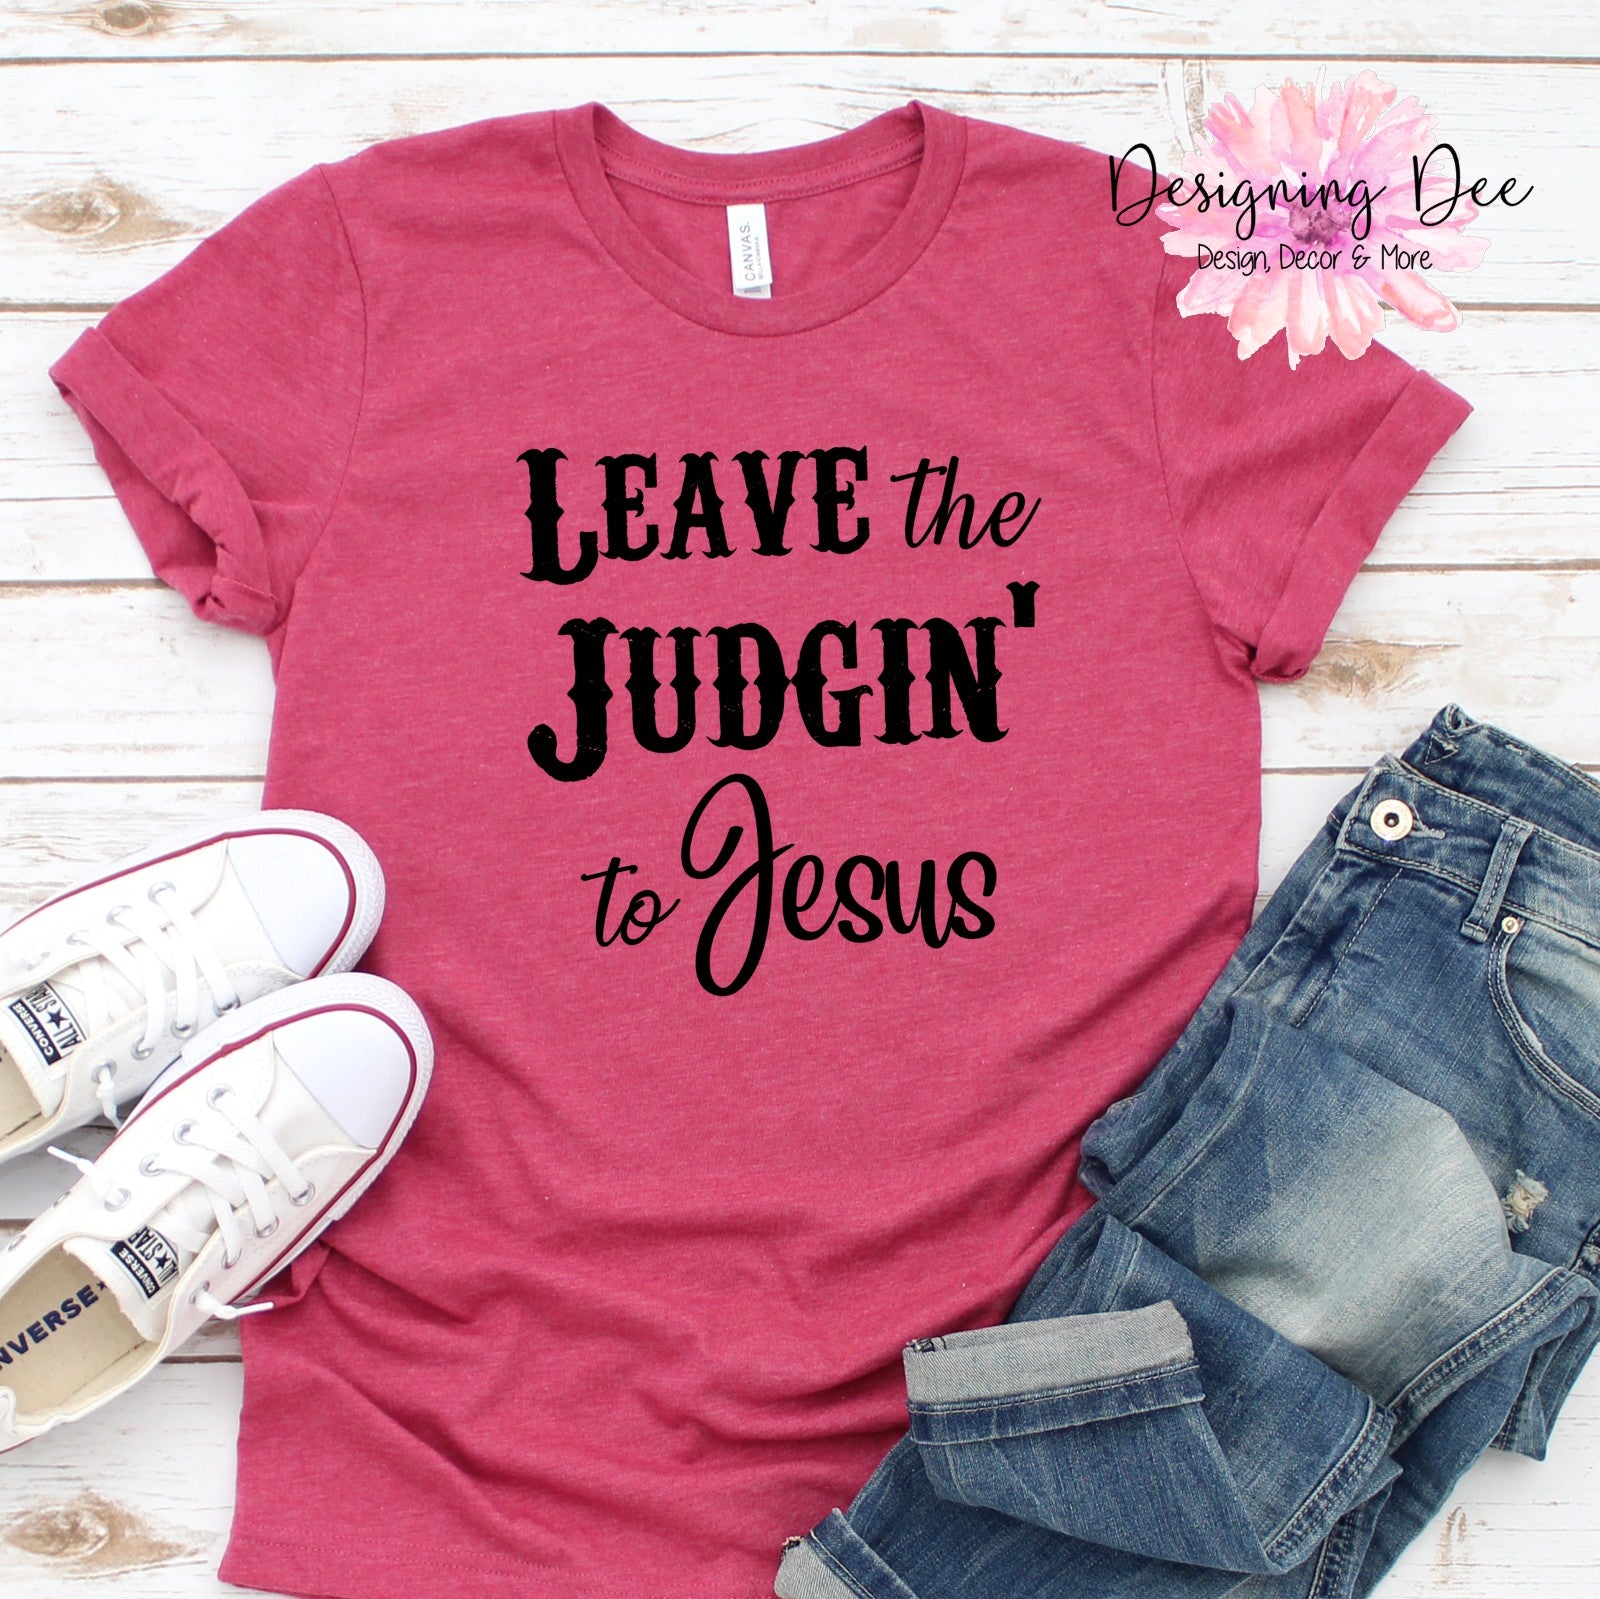 Leave the Judgin to Jesus